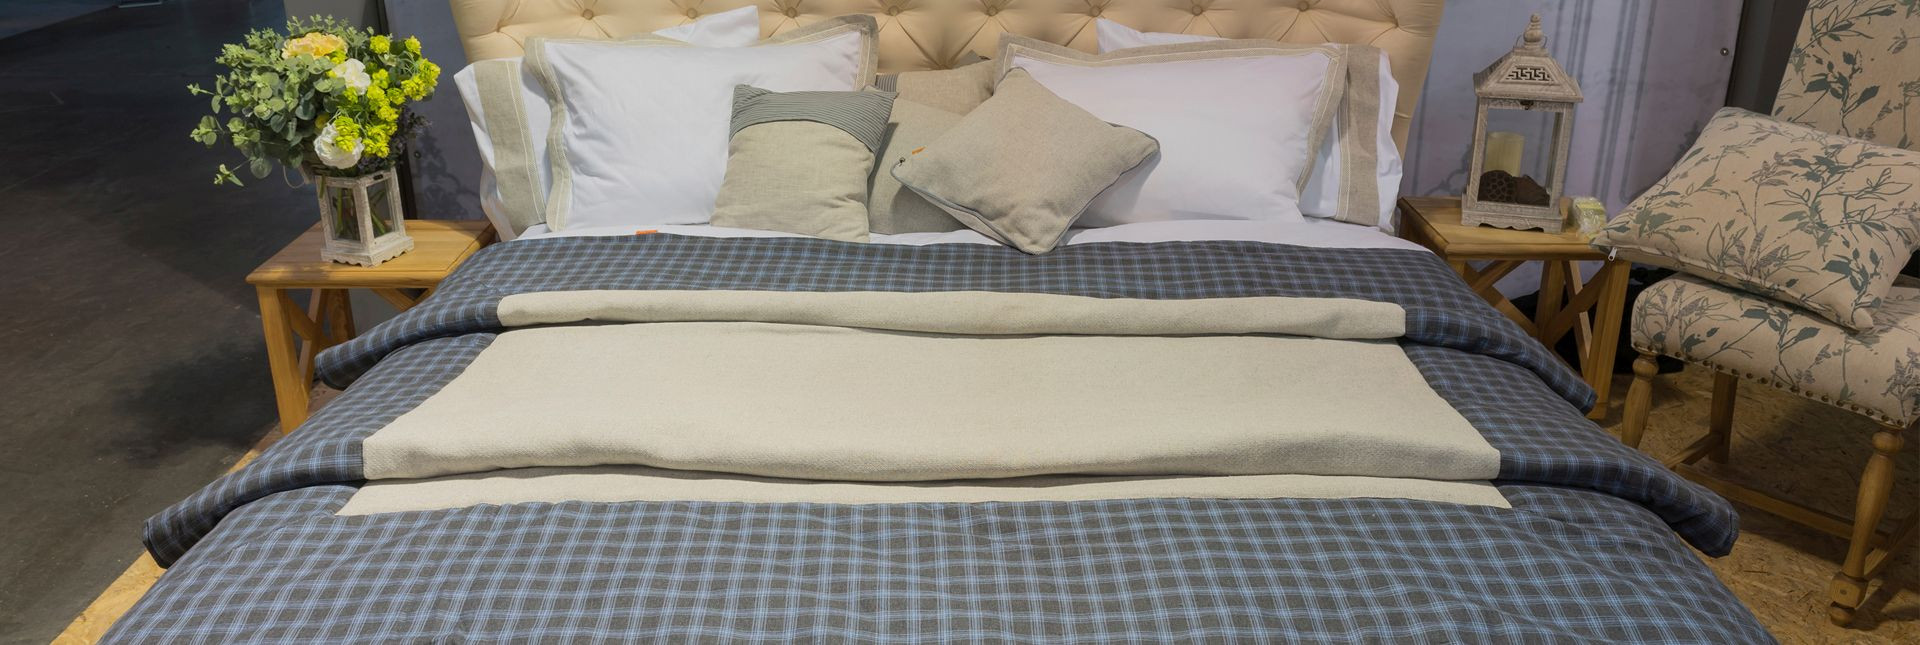 Домашний текстиль для спальни от Devohome